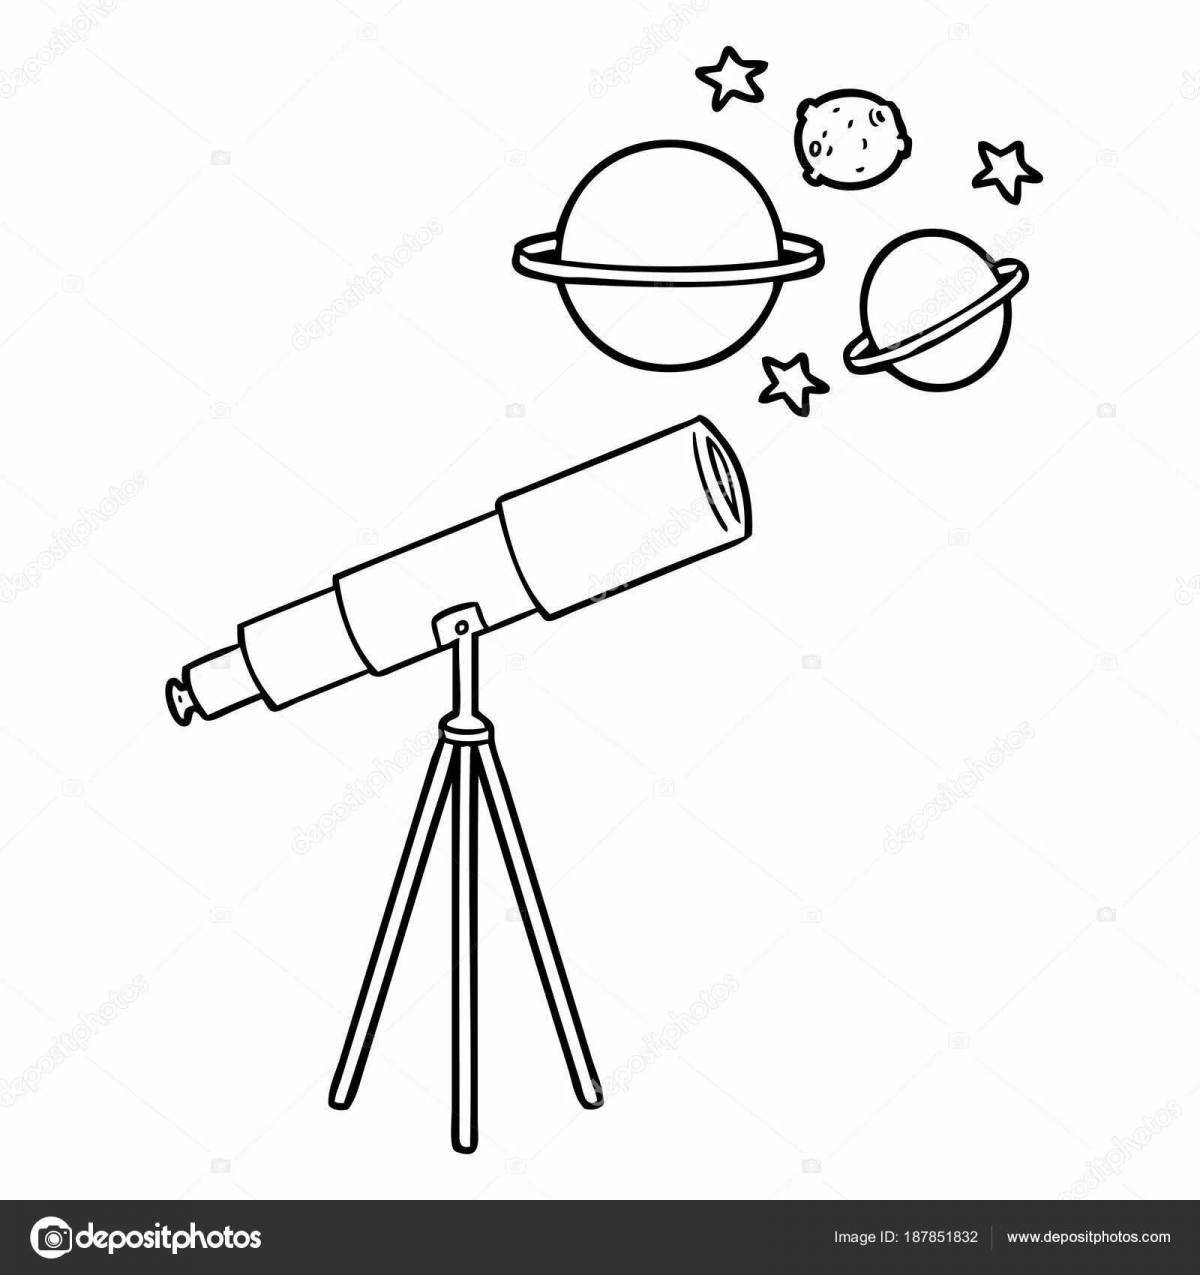 Joyful telescope coloring for kids